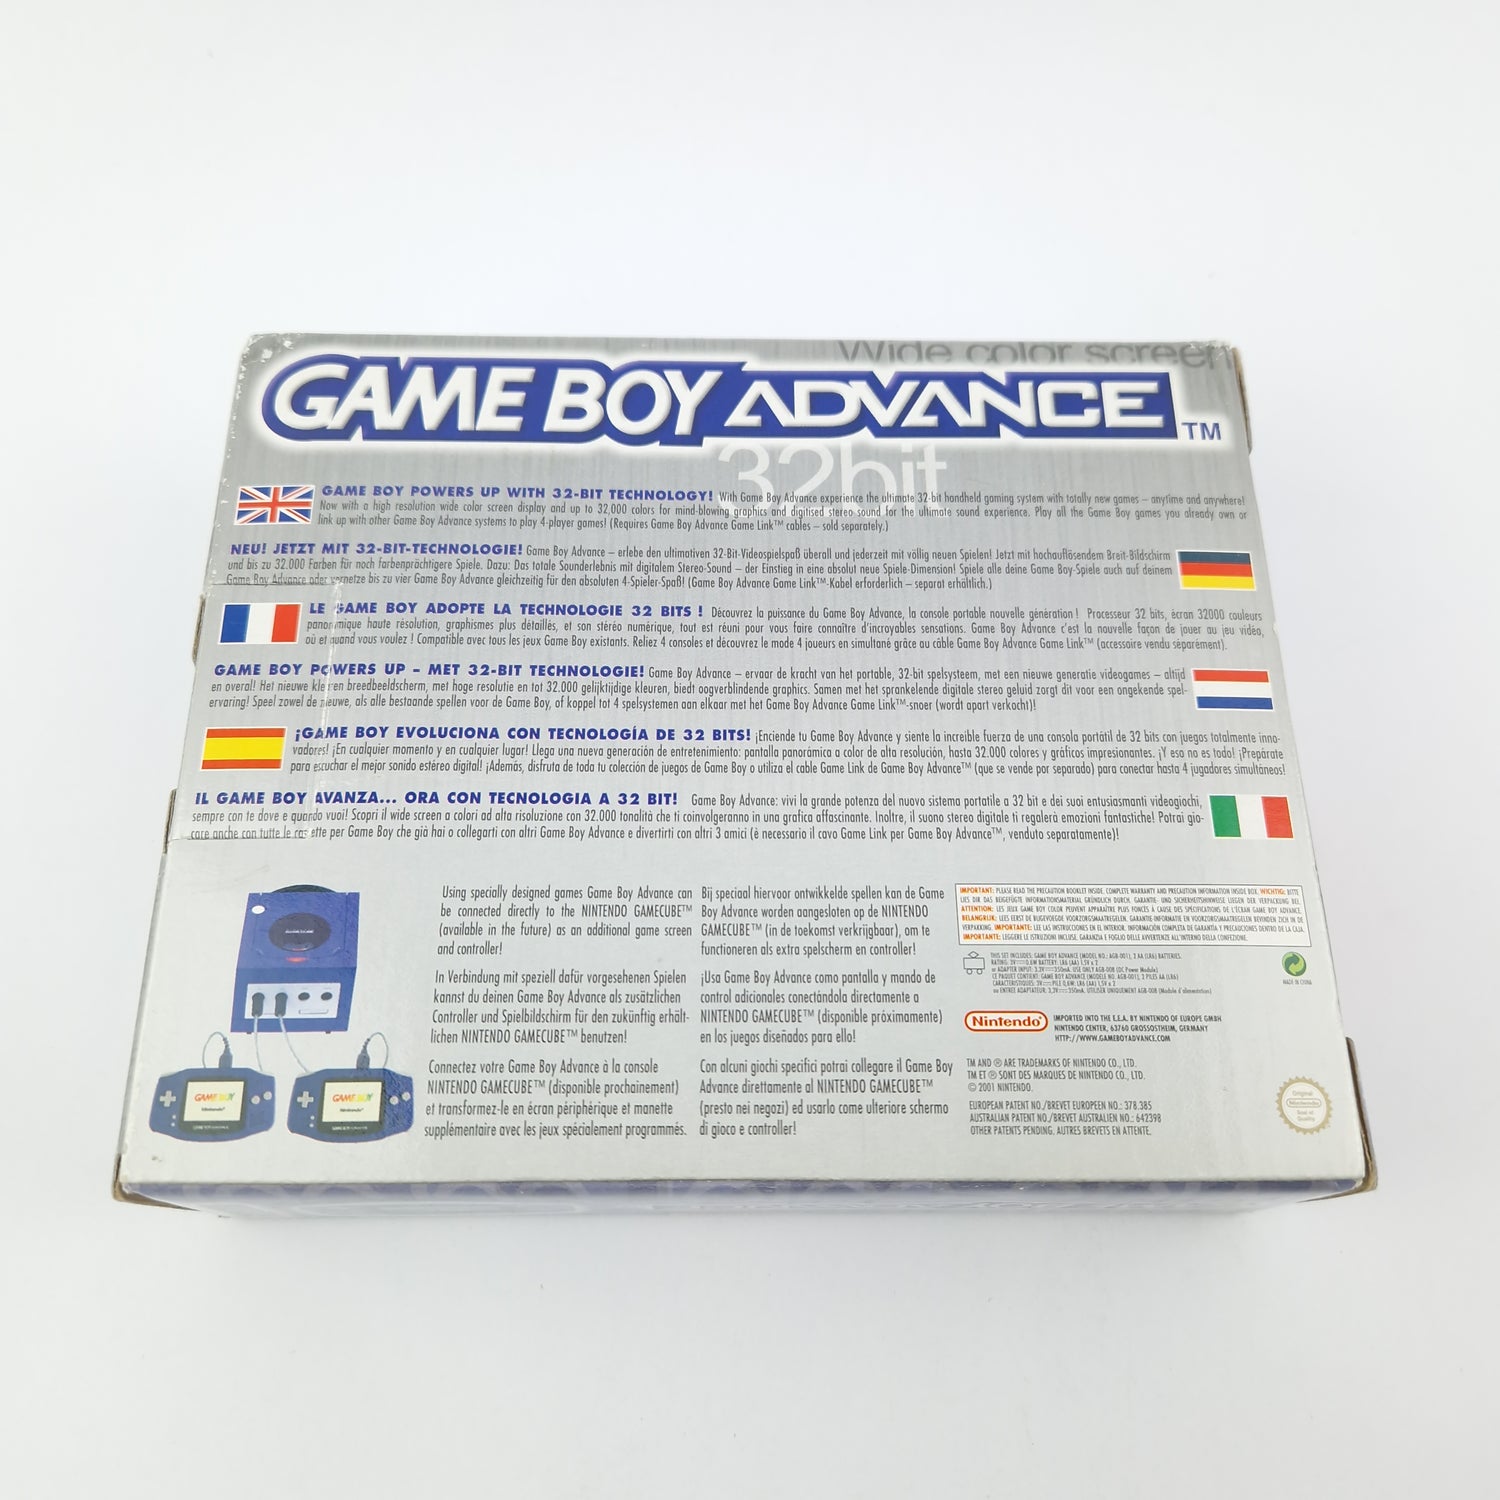 Nintendo Game Boy Advance + Super Mario World Bundle Pak OVP - PAL Konsole GBA